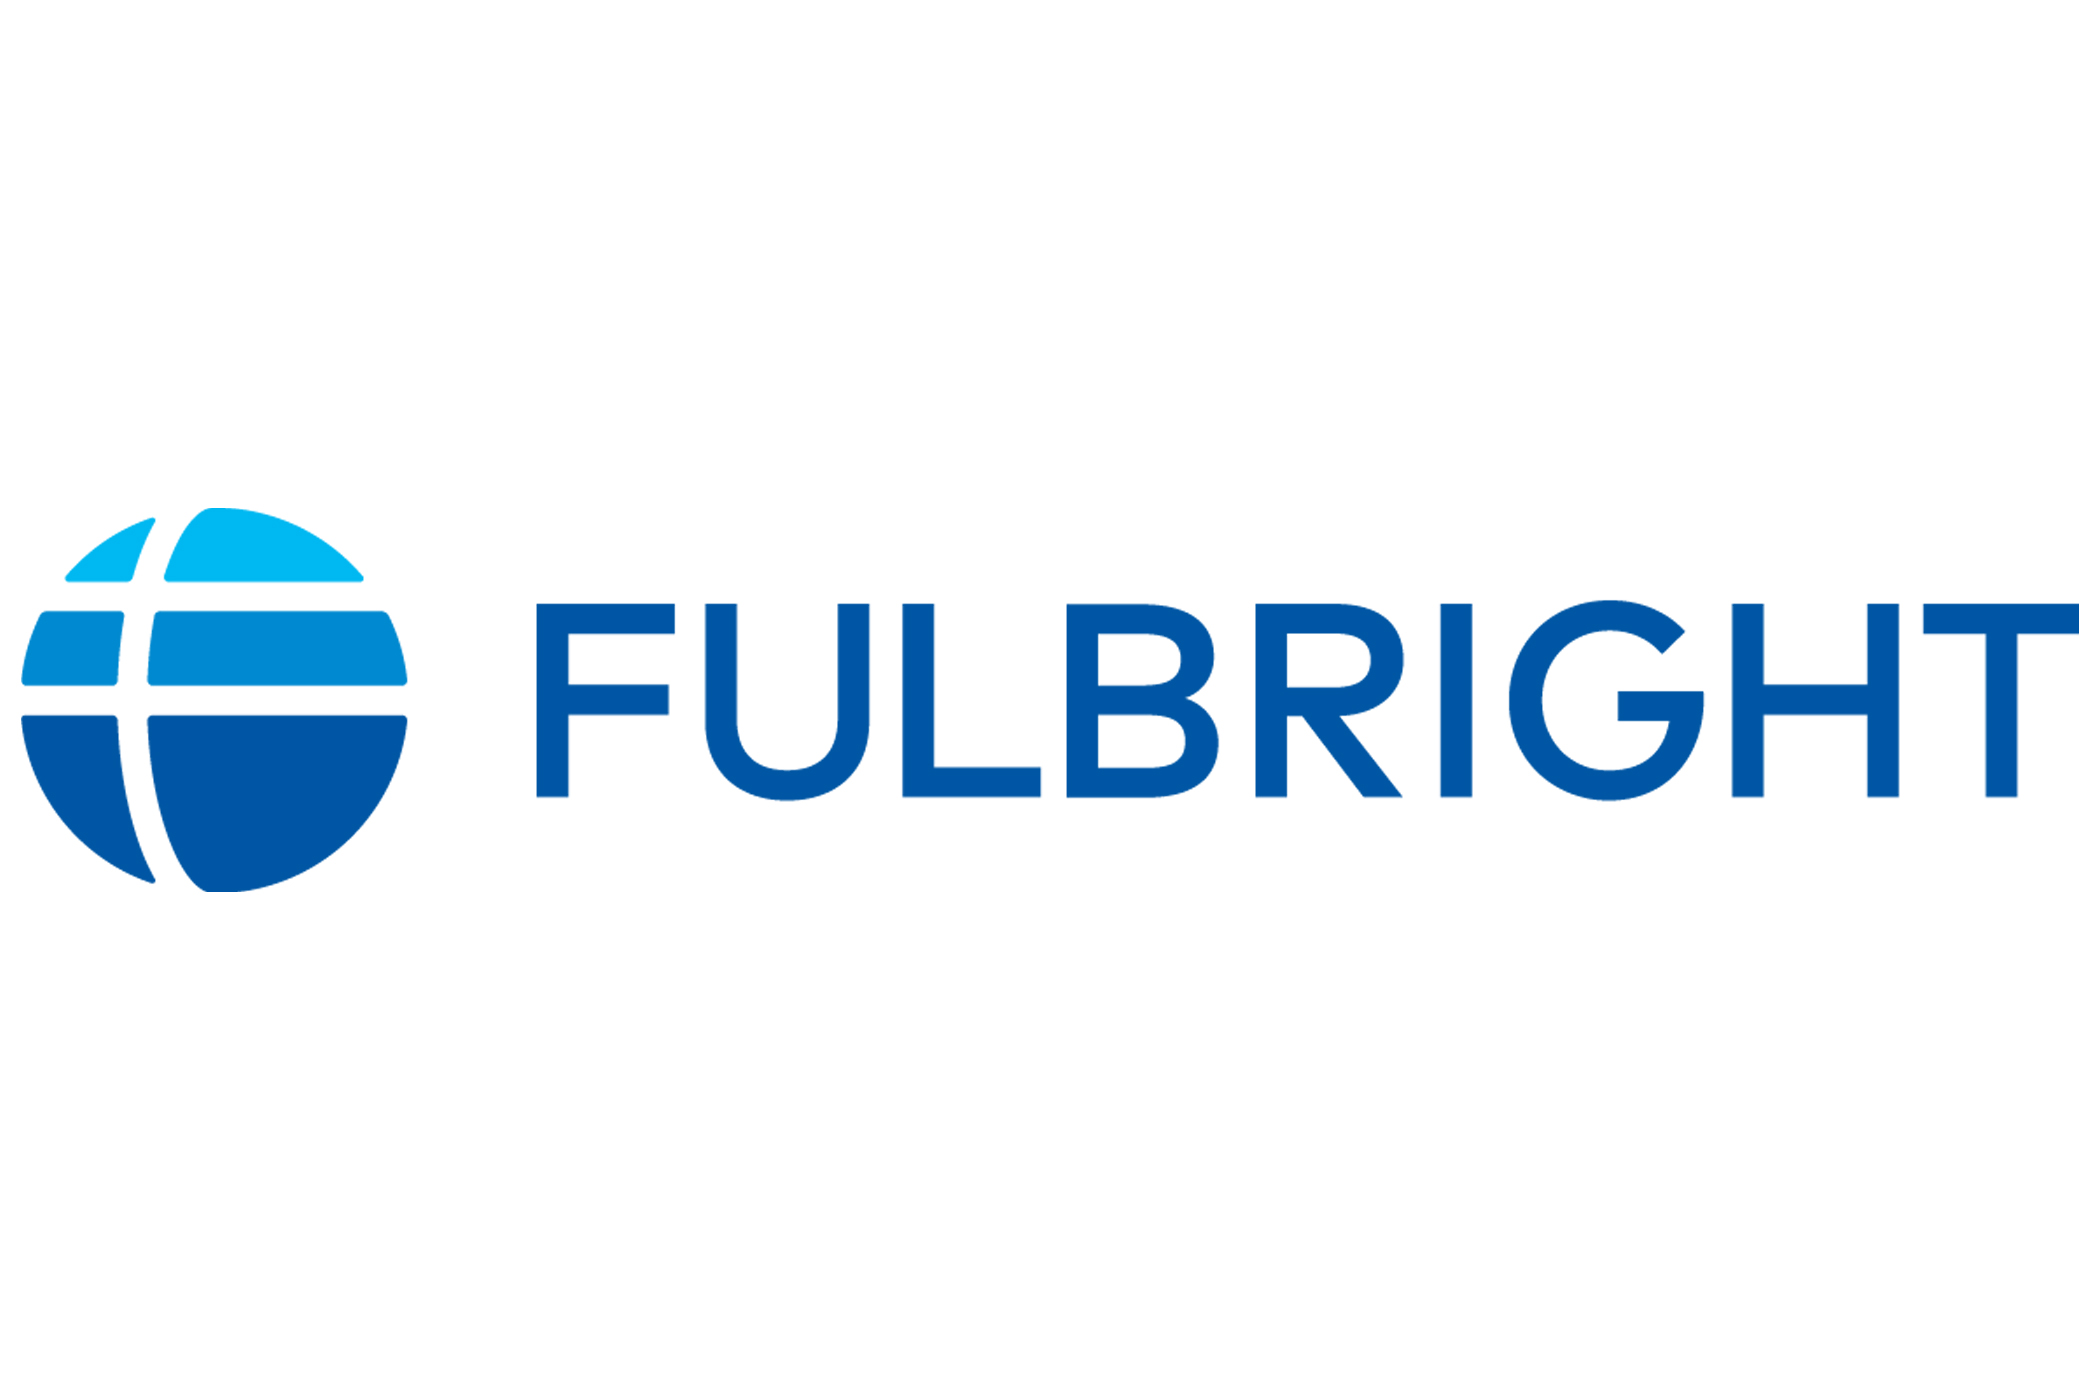 The Fulbright program logo